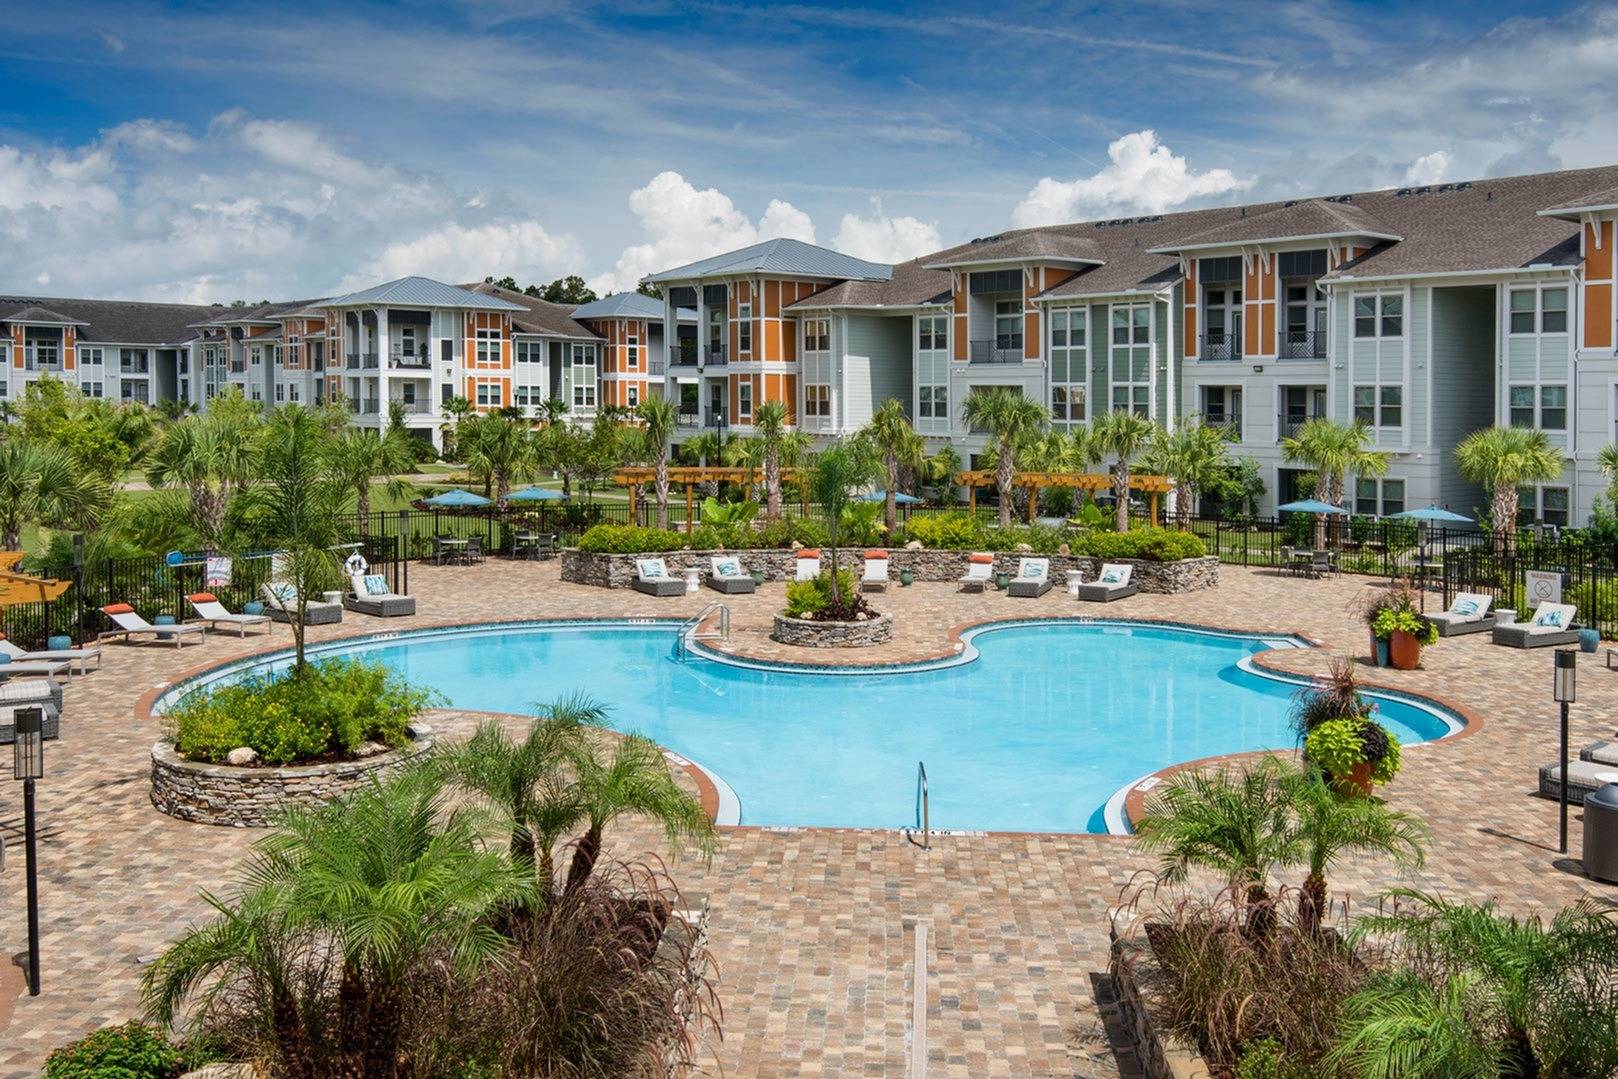 Community Pool | Apartments for rent in Jacksonville, FL | Sorrel